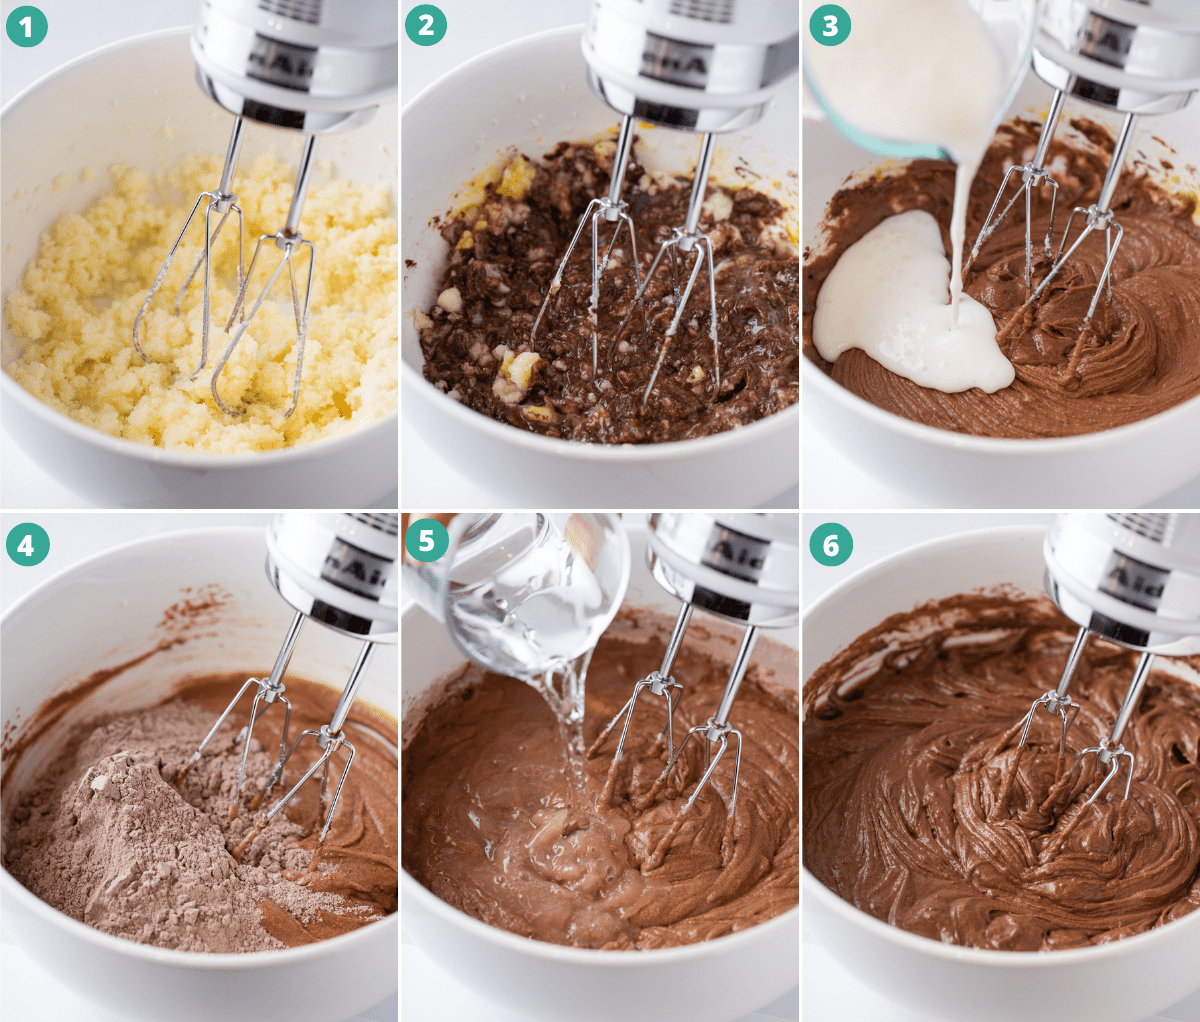 6 photos showing process of making chocolate cake batter